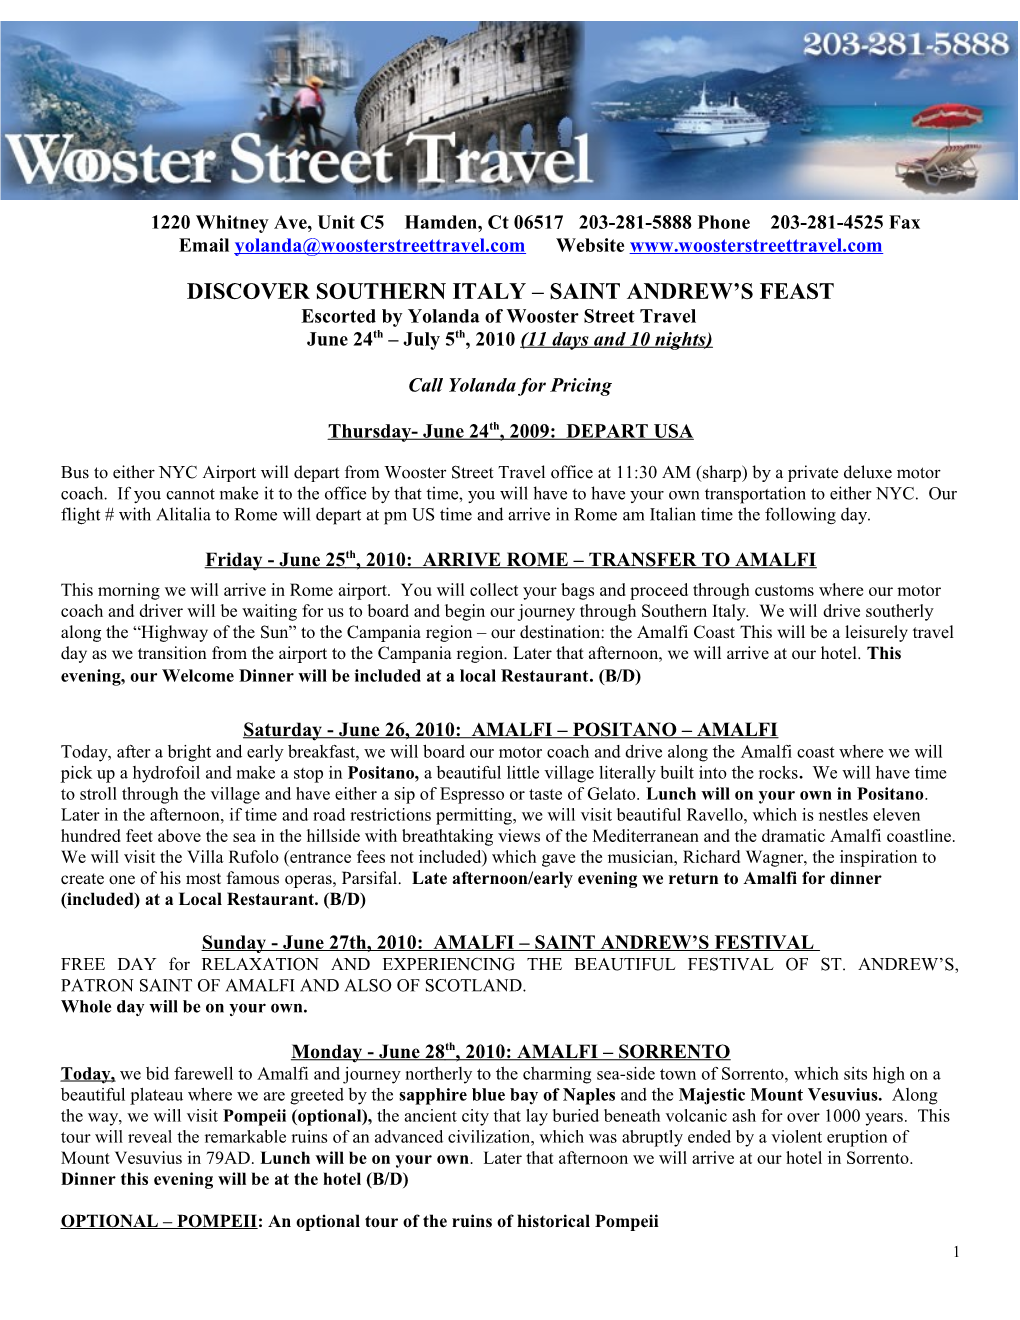 Wooster Street Travel